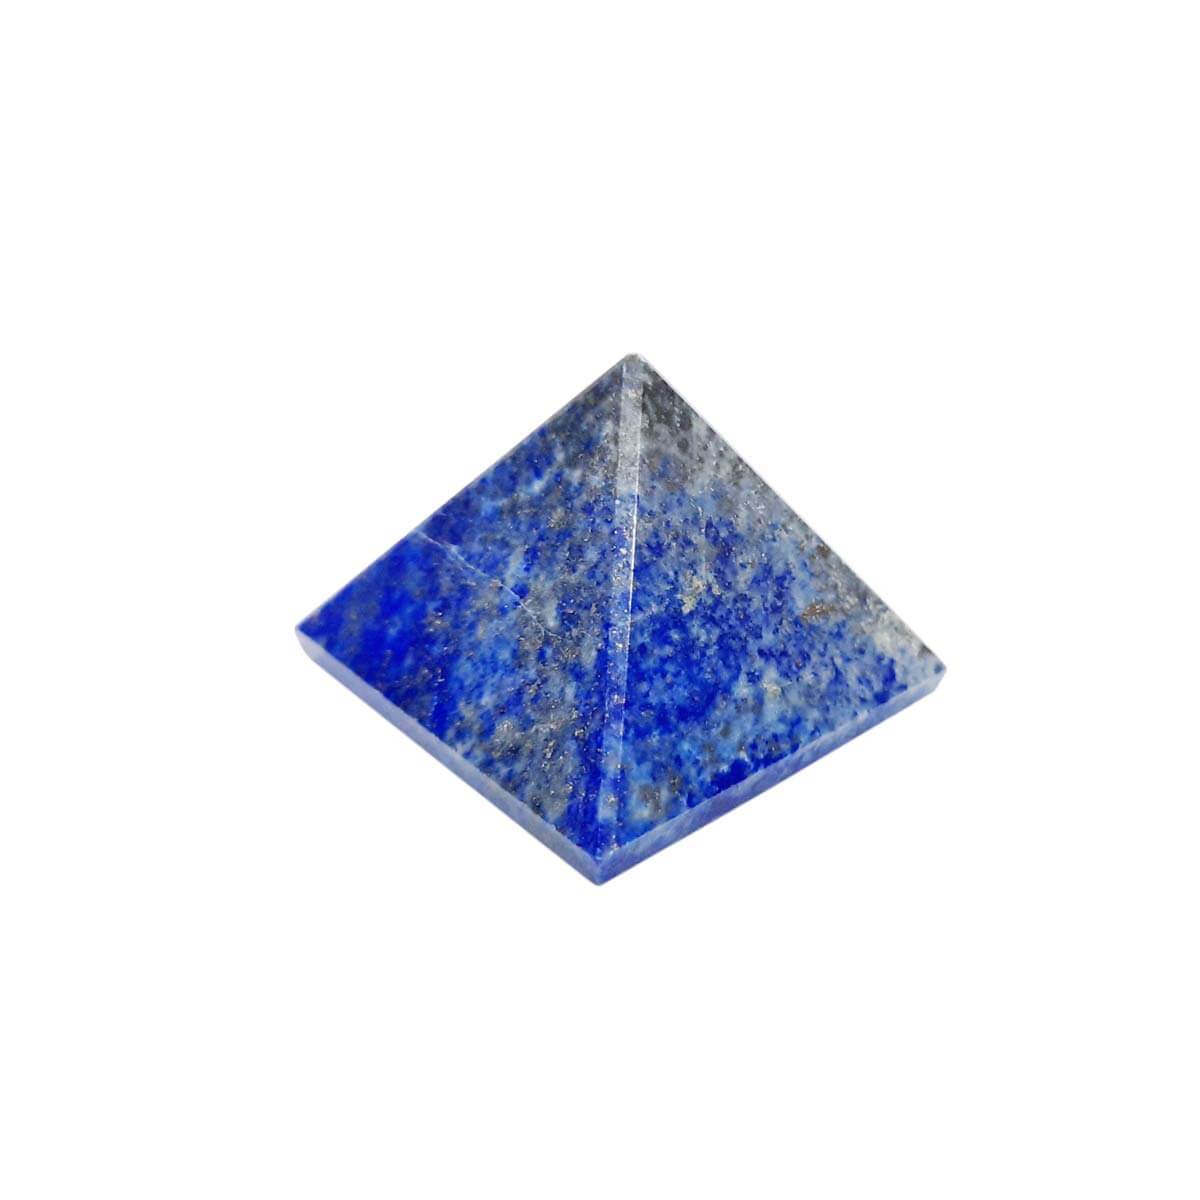 Lapis Lazuli Crystal Pyramid, Natural Lapis Lazulihyst Stone for Reiki Healing, Crystal Healing, Vastu, Positive Energy, Money, Home Décor